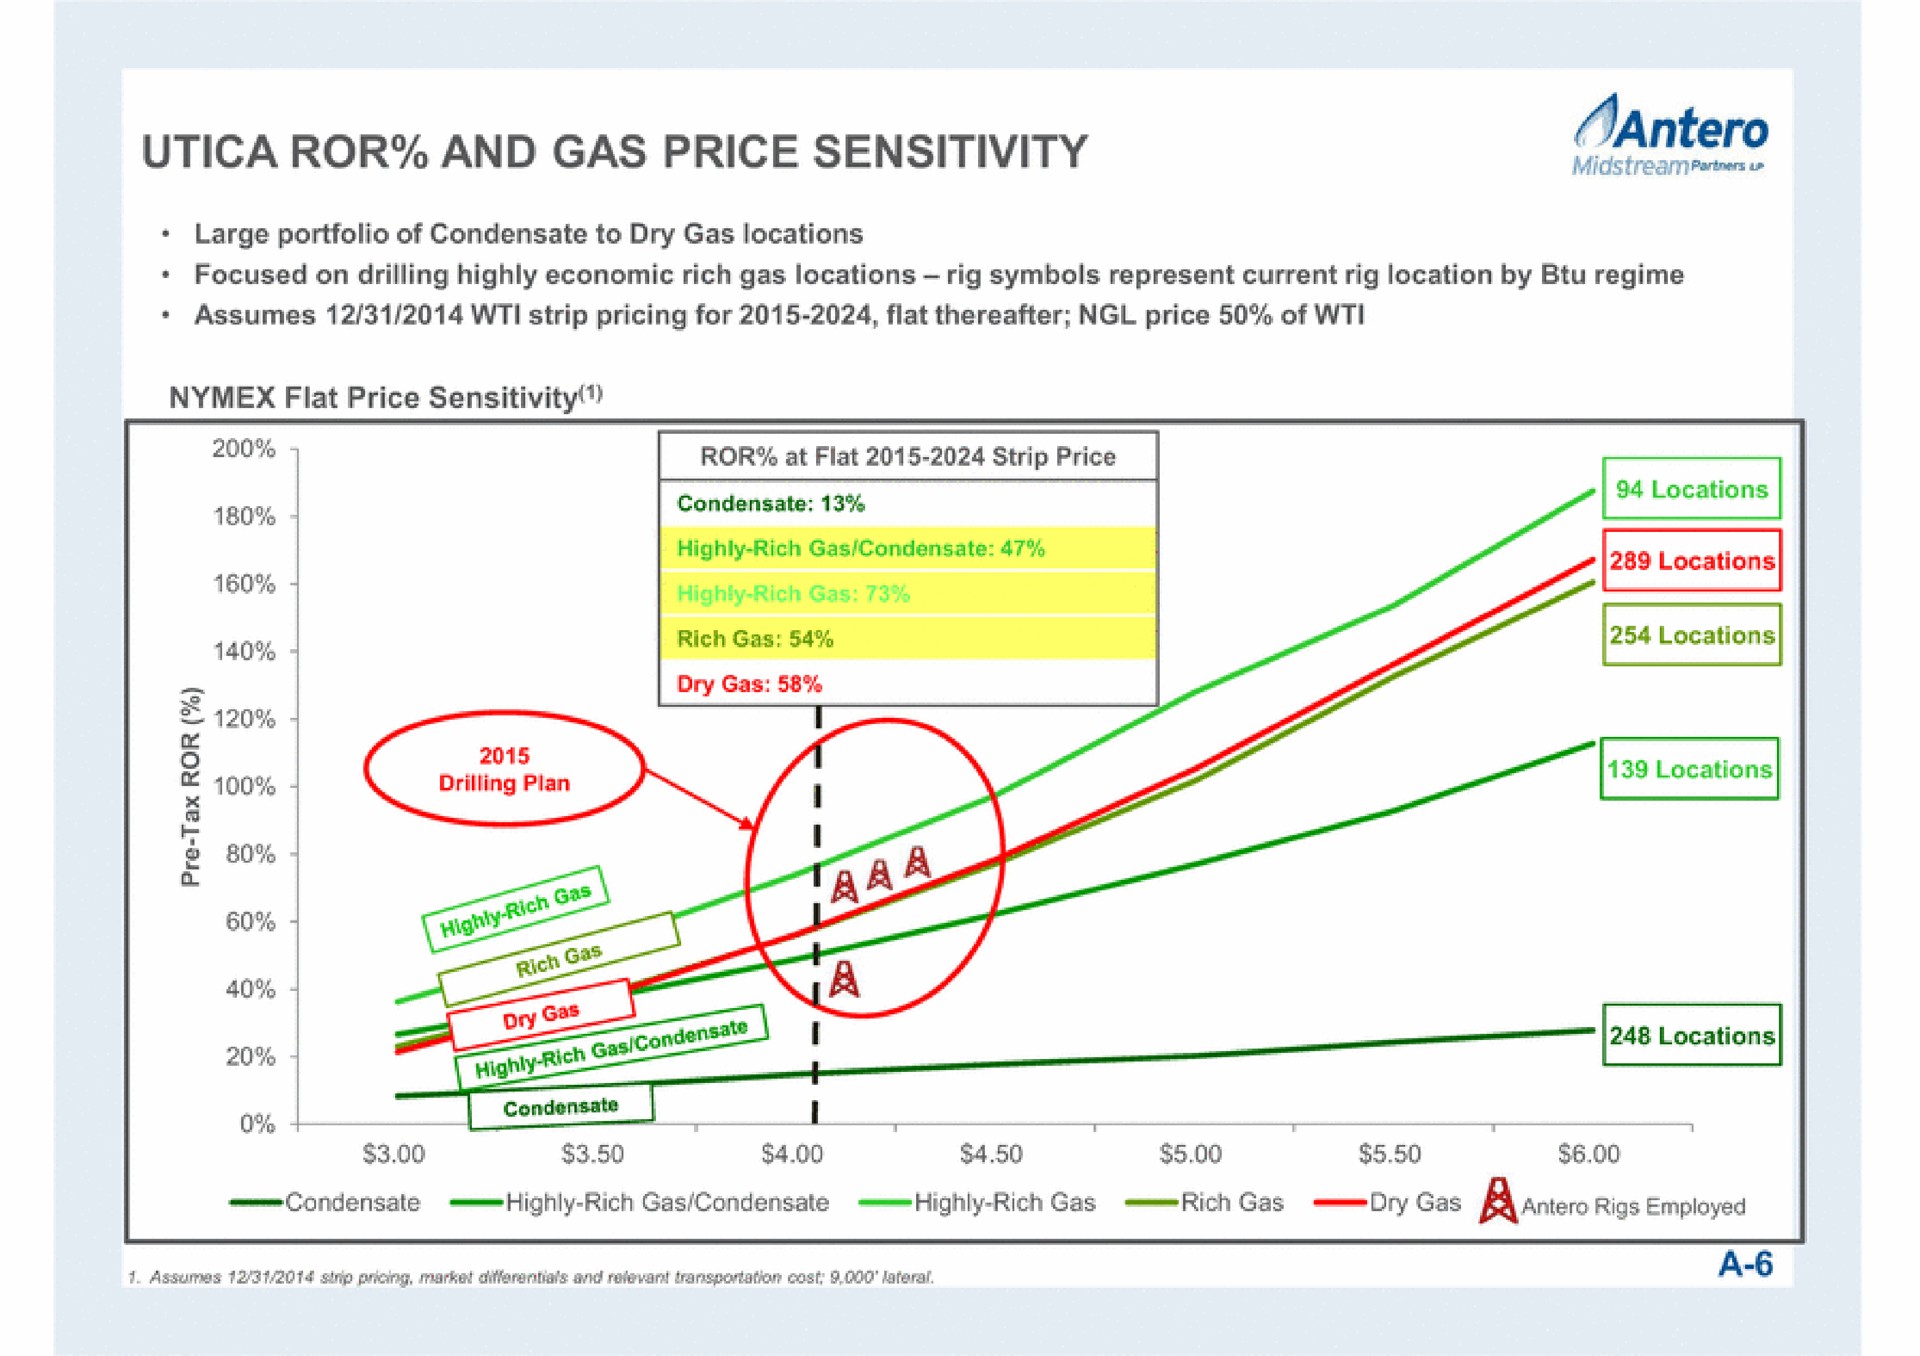 and gas price sensitivity i a | Antero Midstream Partners